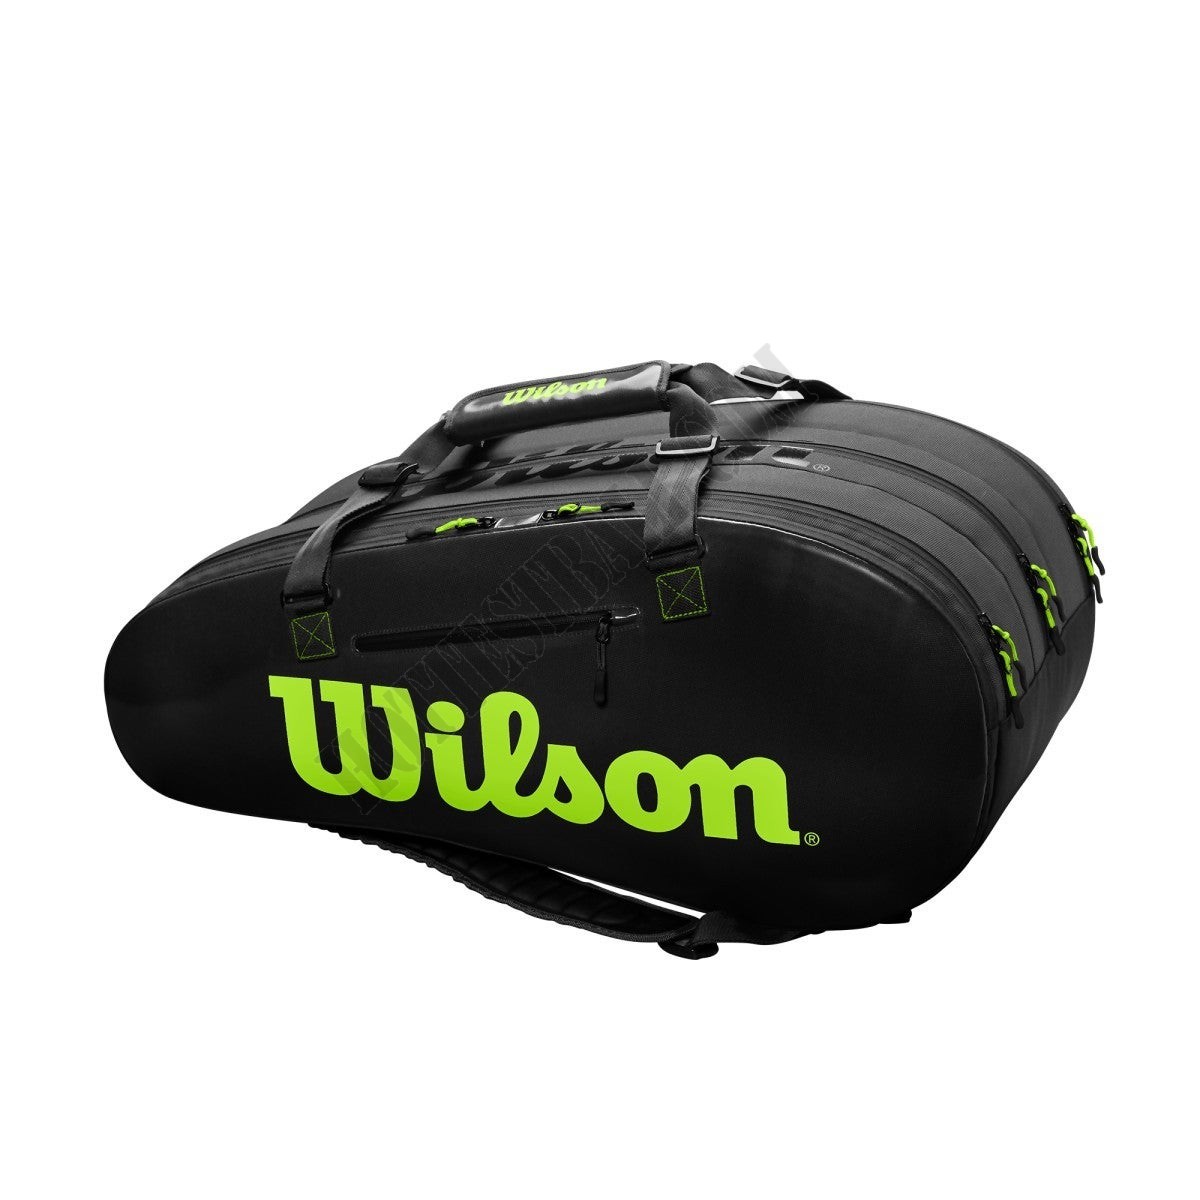 2019 Super Tour 3 Compartment Tennis Bag - Wilson Discount Store - 2019 Super Tour 3 Compartment Tennis Bag - Wilson Discount Store